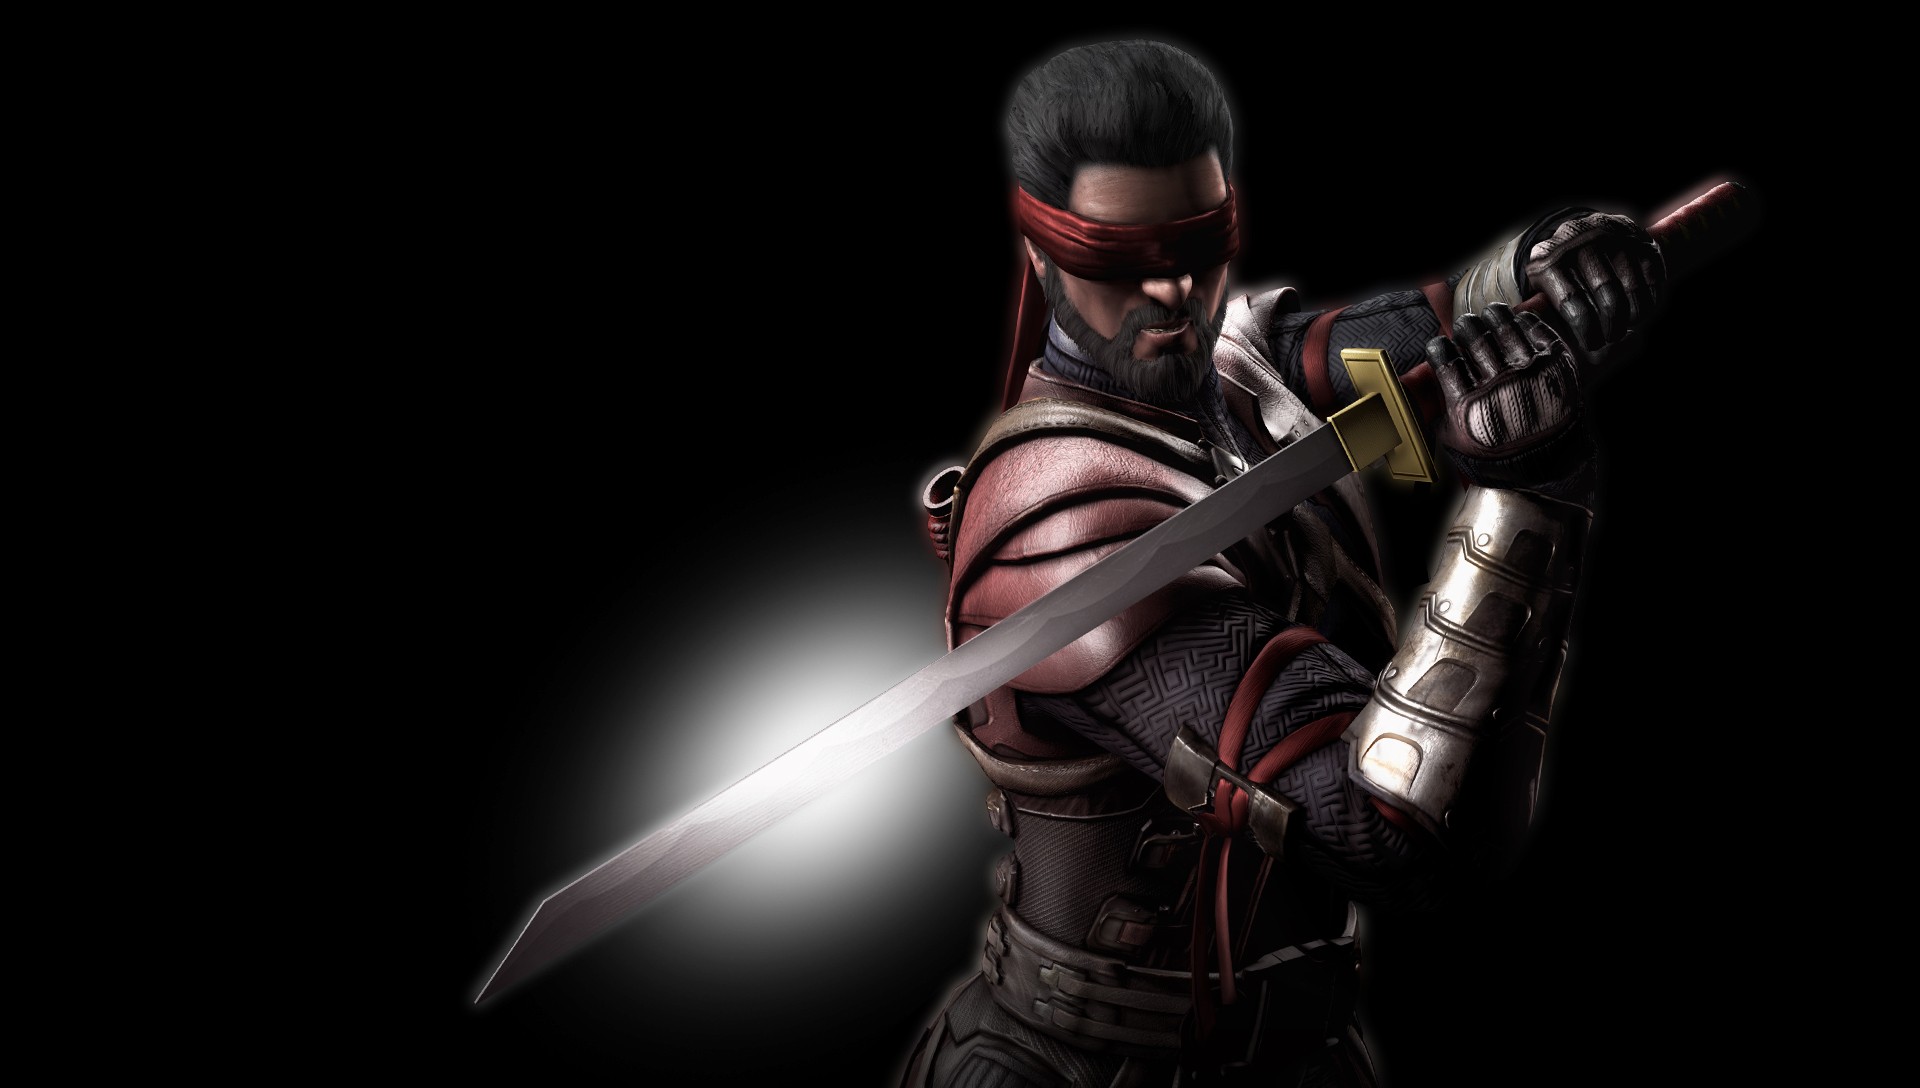 General 1920x1088 Mortal Kombat X video games video game warriors sword video game men video game characters weapon simple background black background